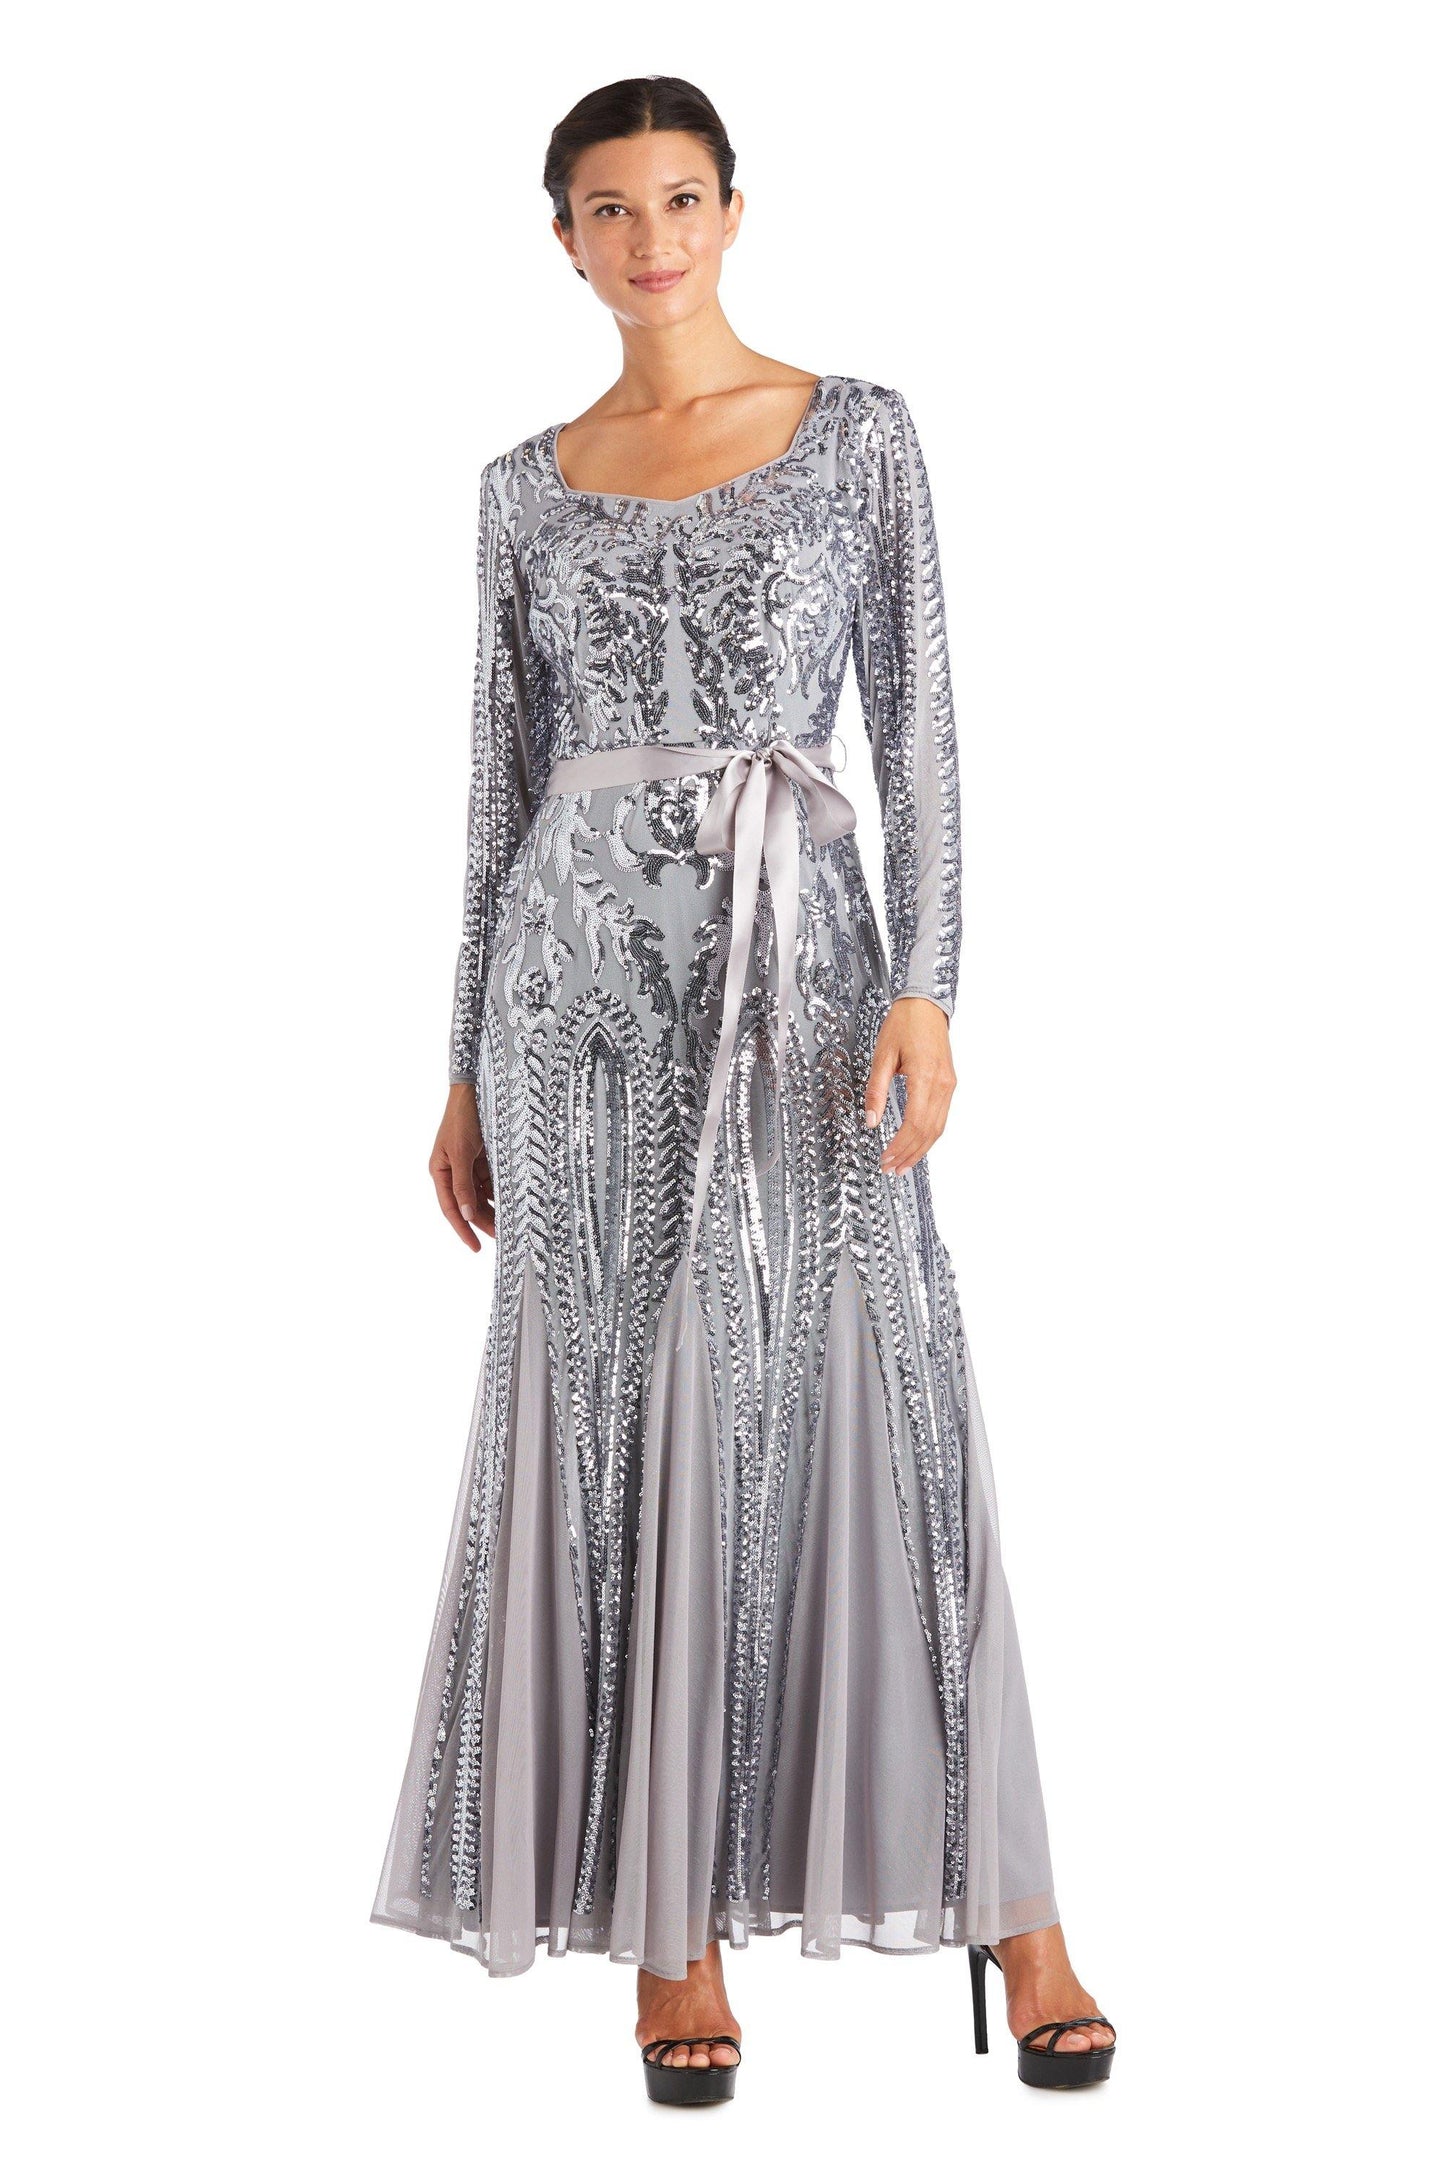 R&M Richards Long Sleeve Formal Petite Dress 5623P - The Dress Outlet